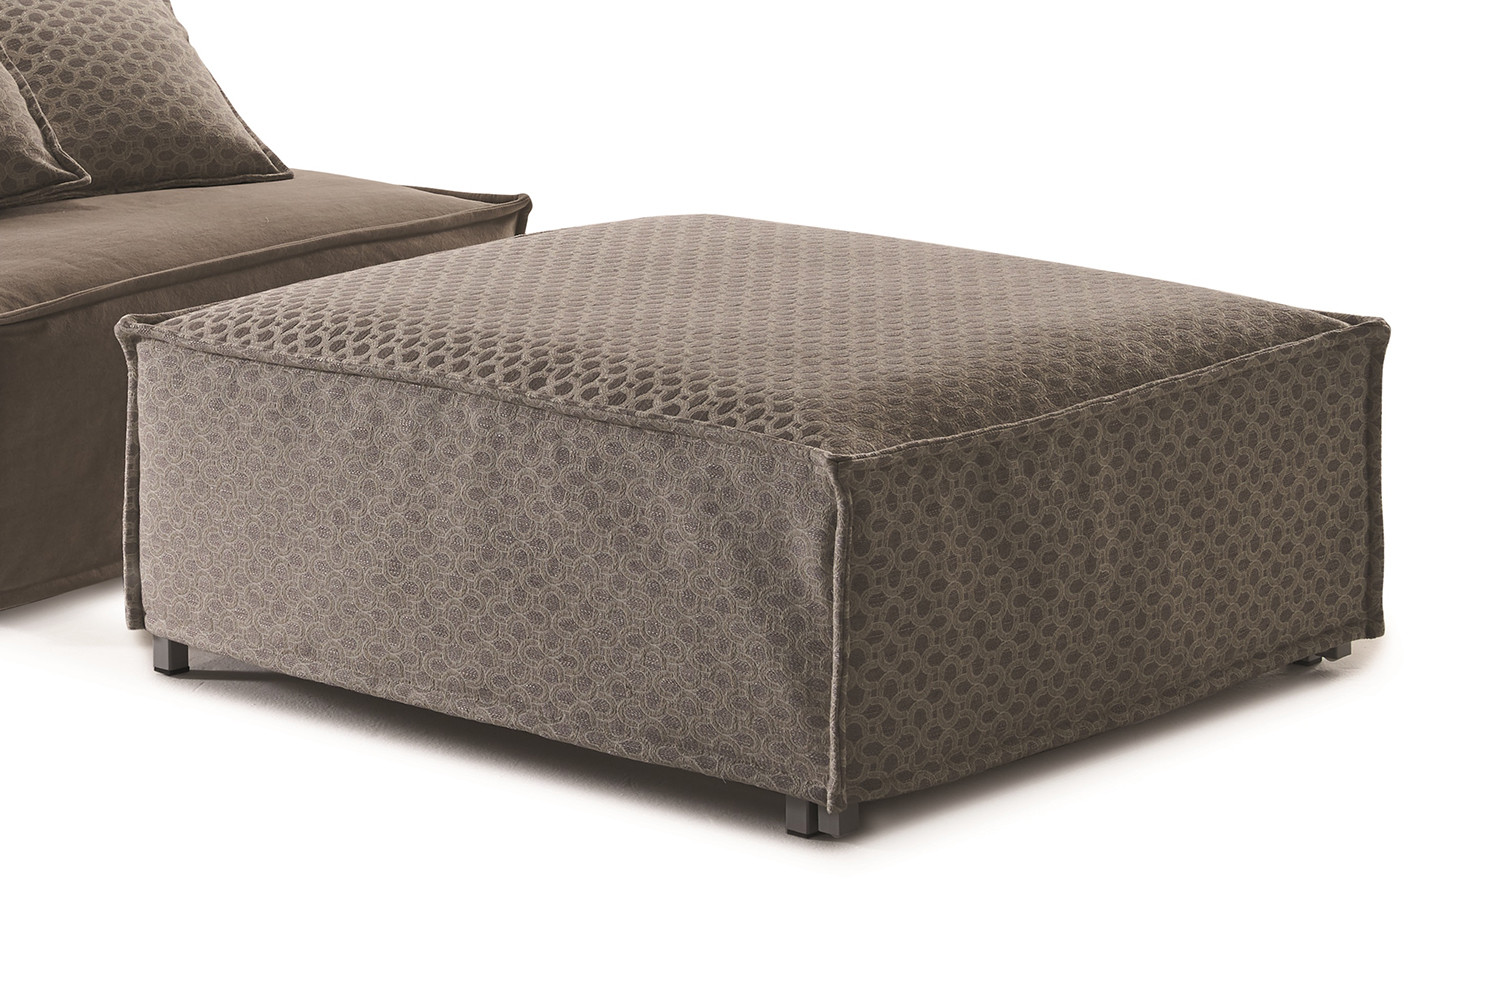 Single or double ottoman sofa bed